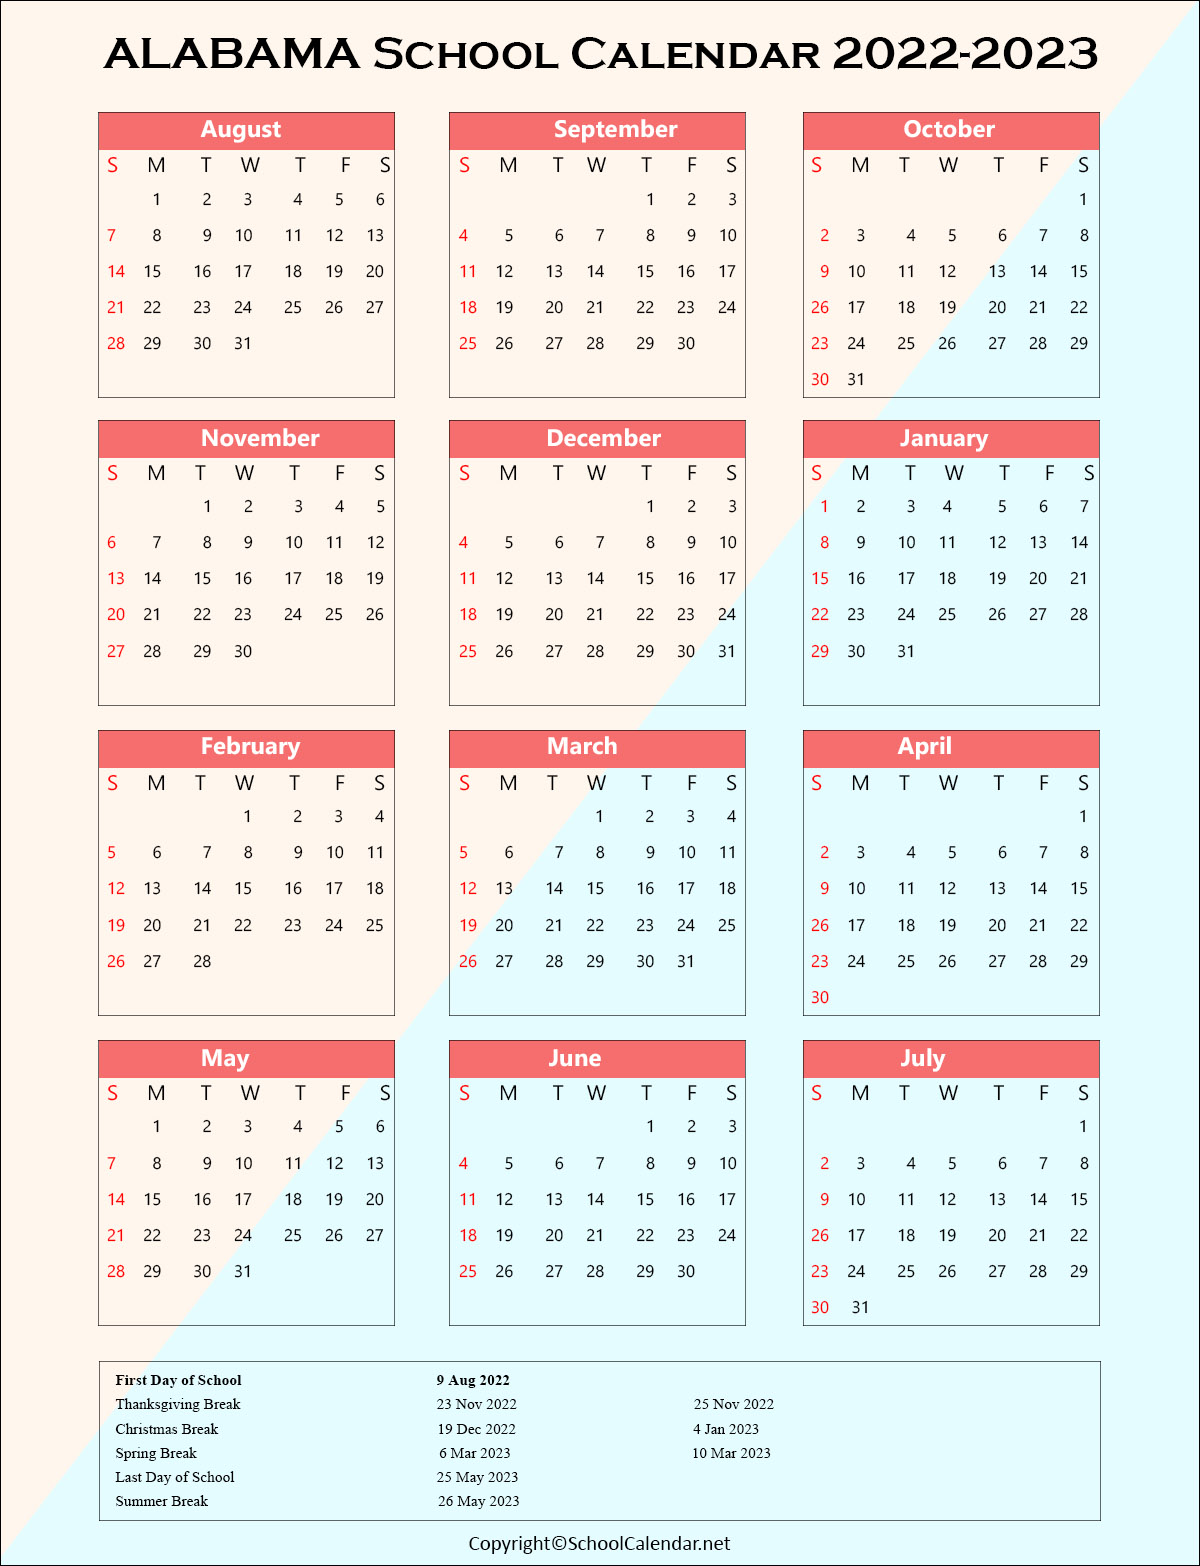 Alabama School Holiday Calendar 2022